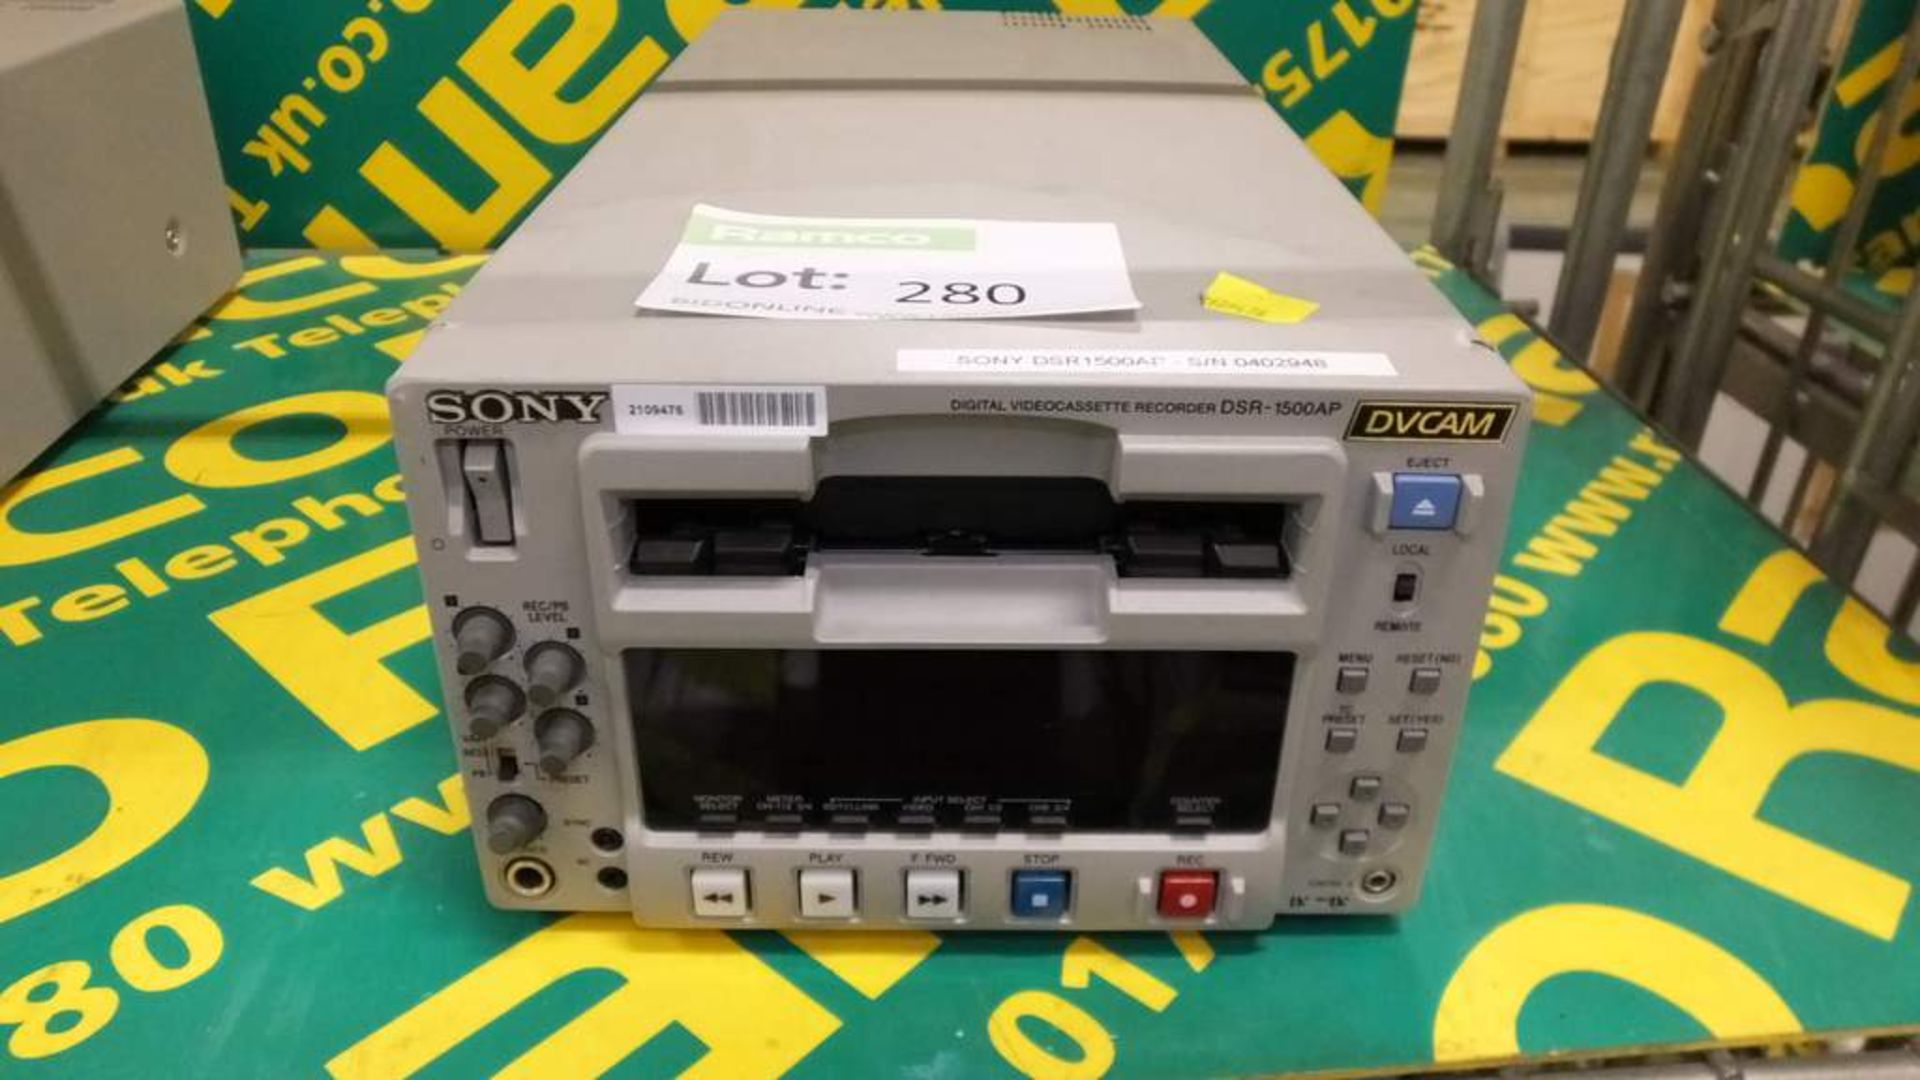 Sony digital videocassette recorder DSR-1500AP